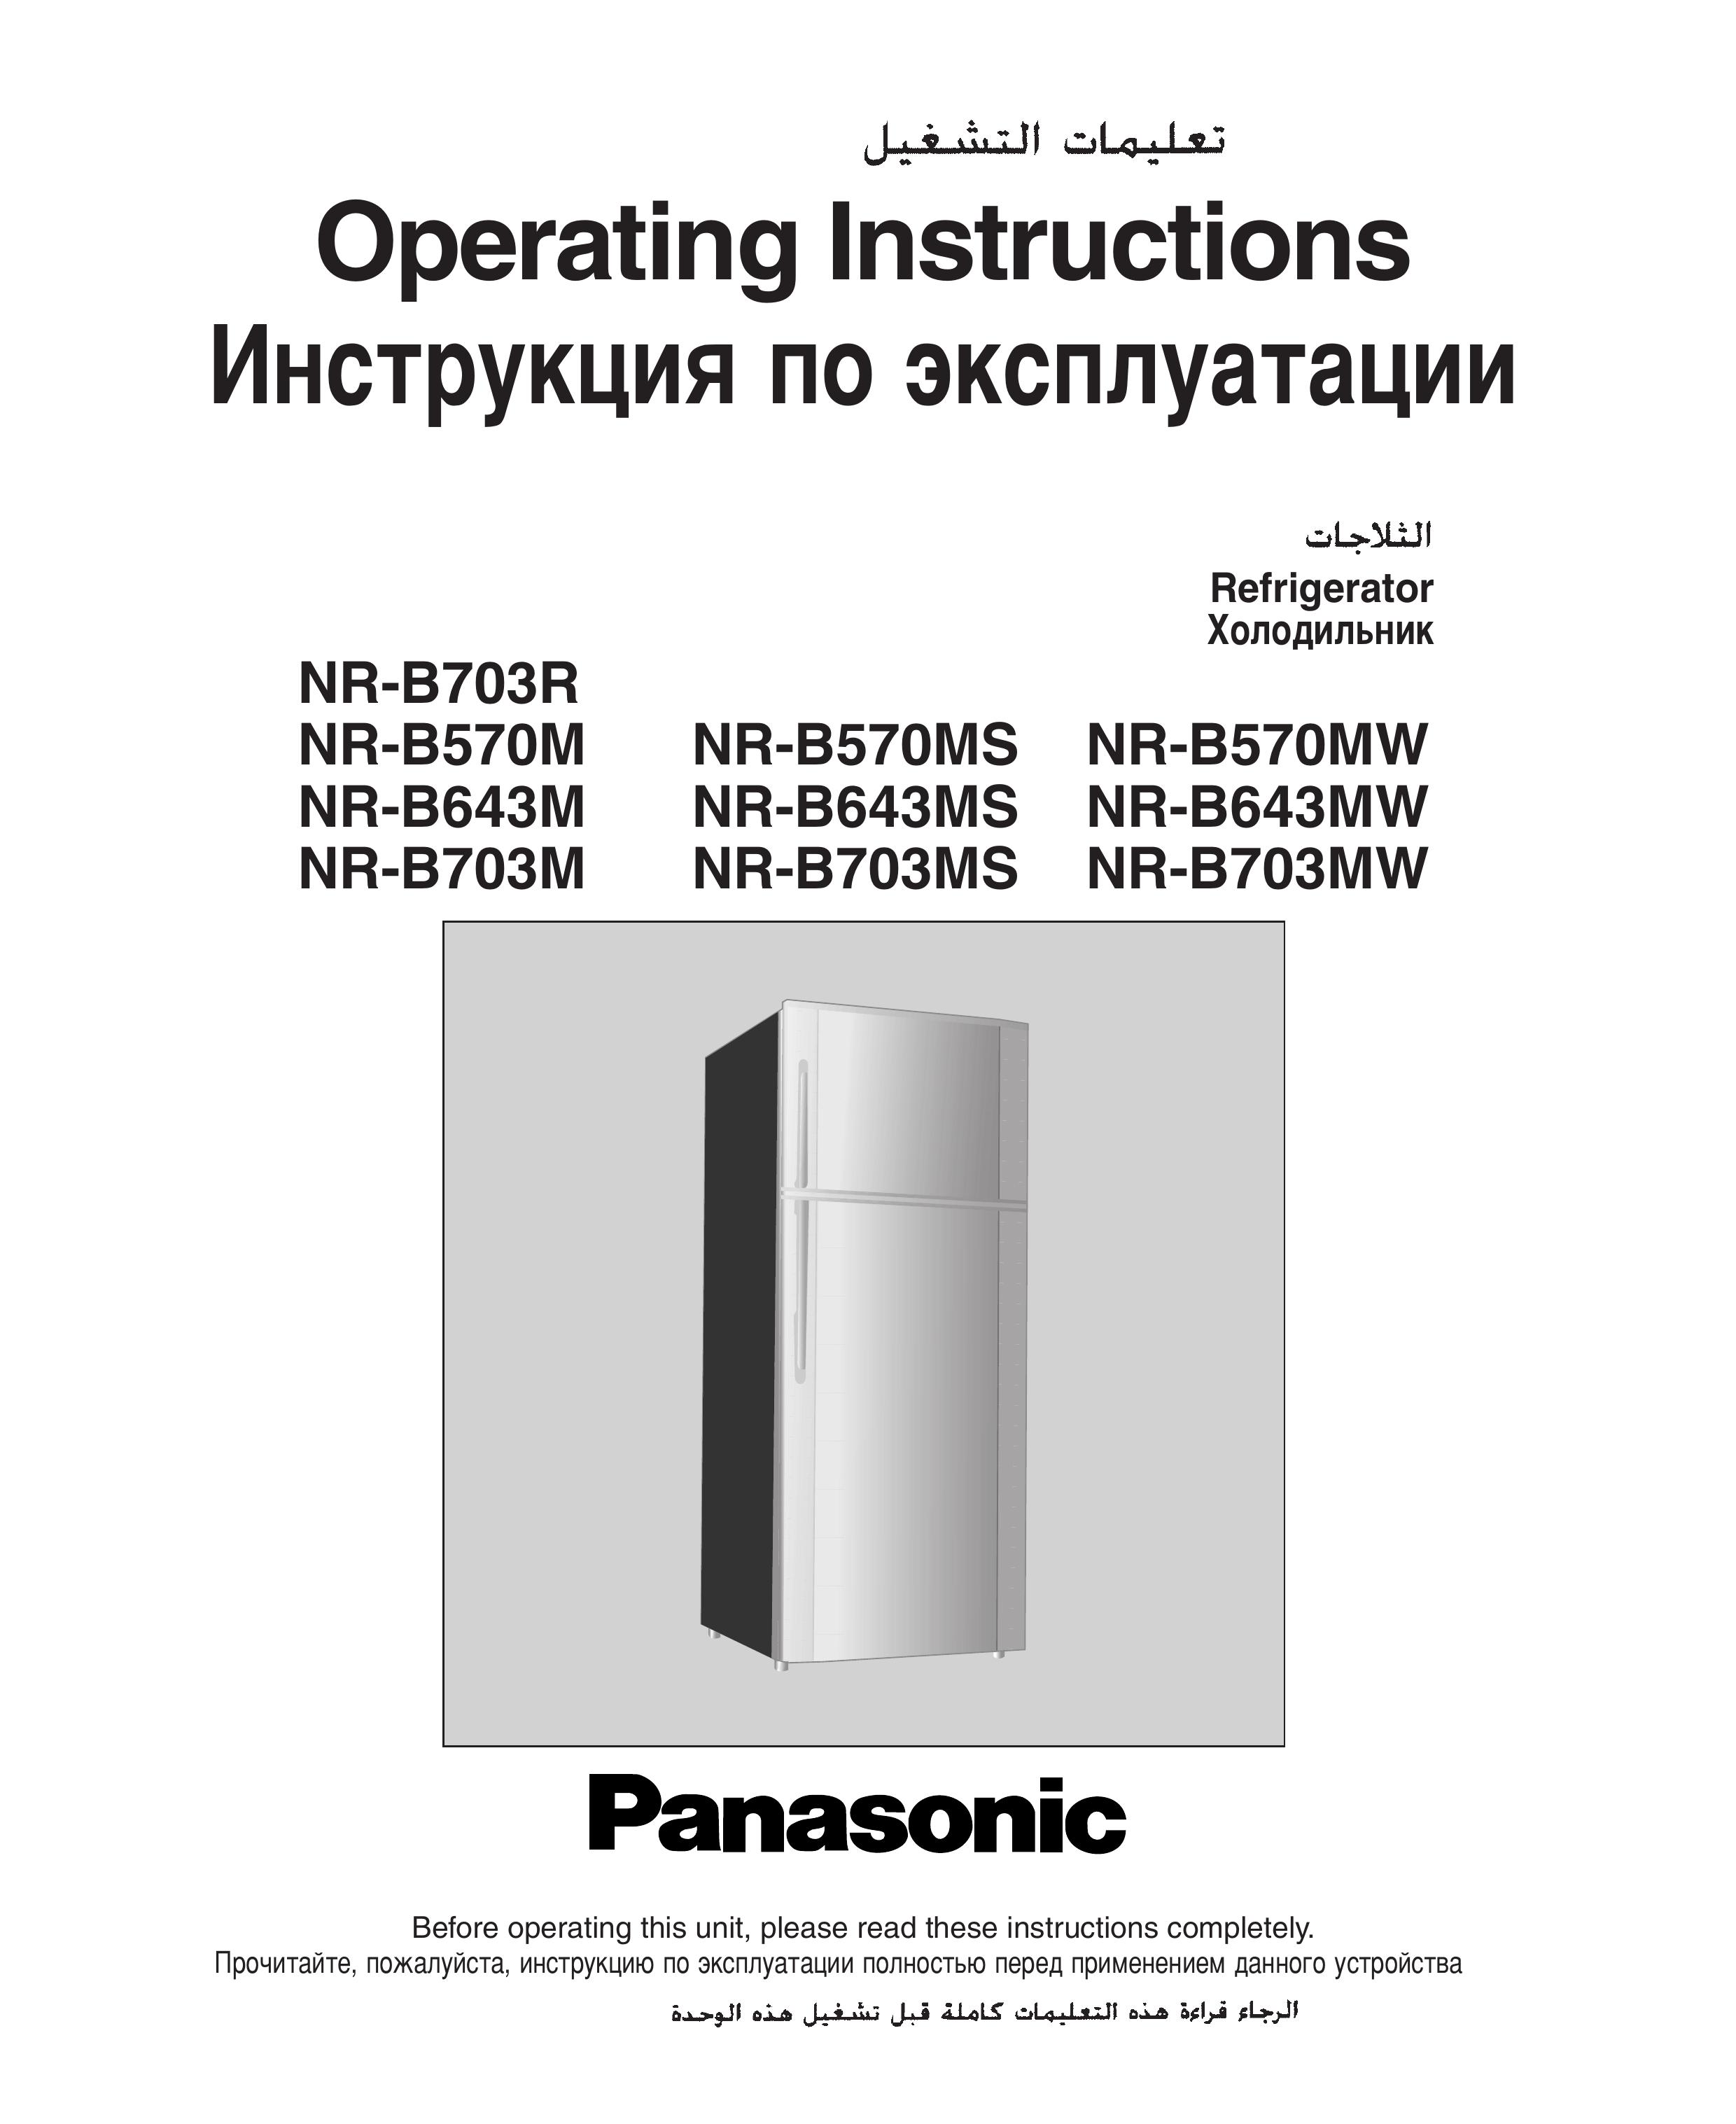 Panasonic NR-B643MW Refrigerator User Manual